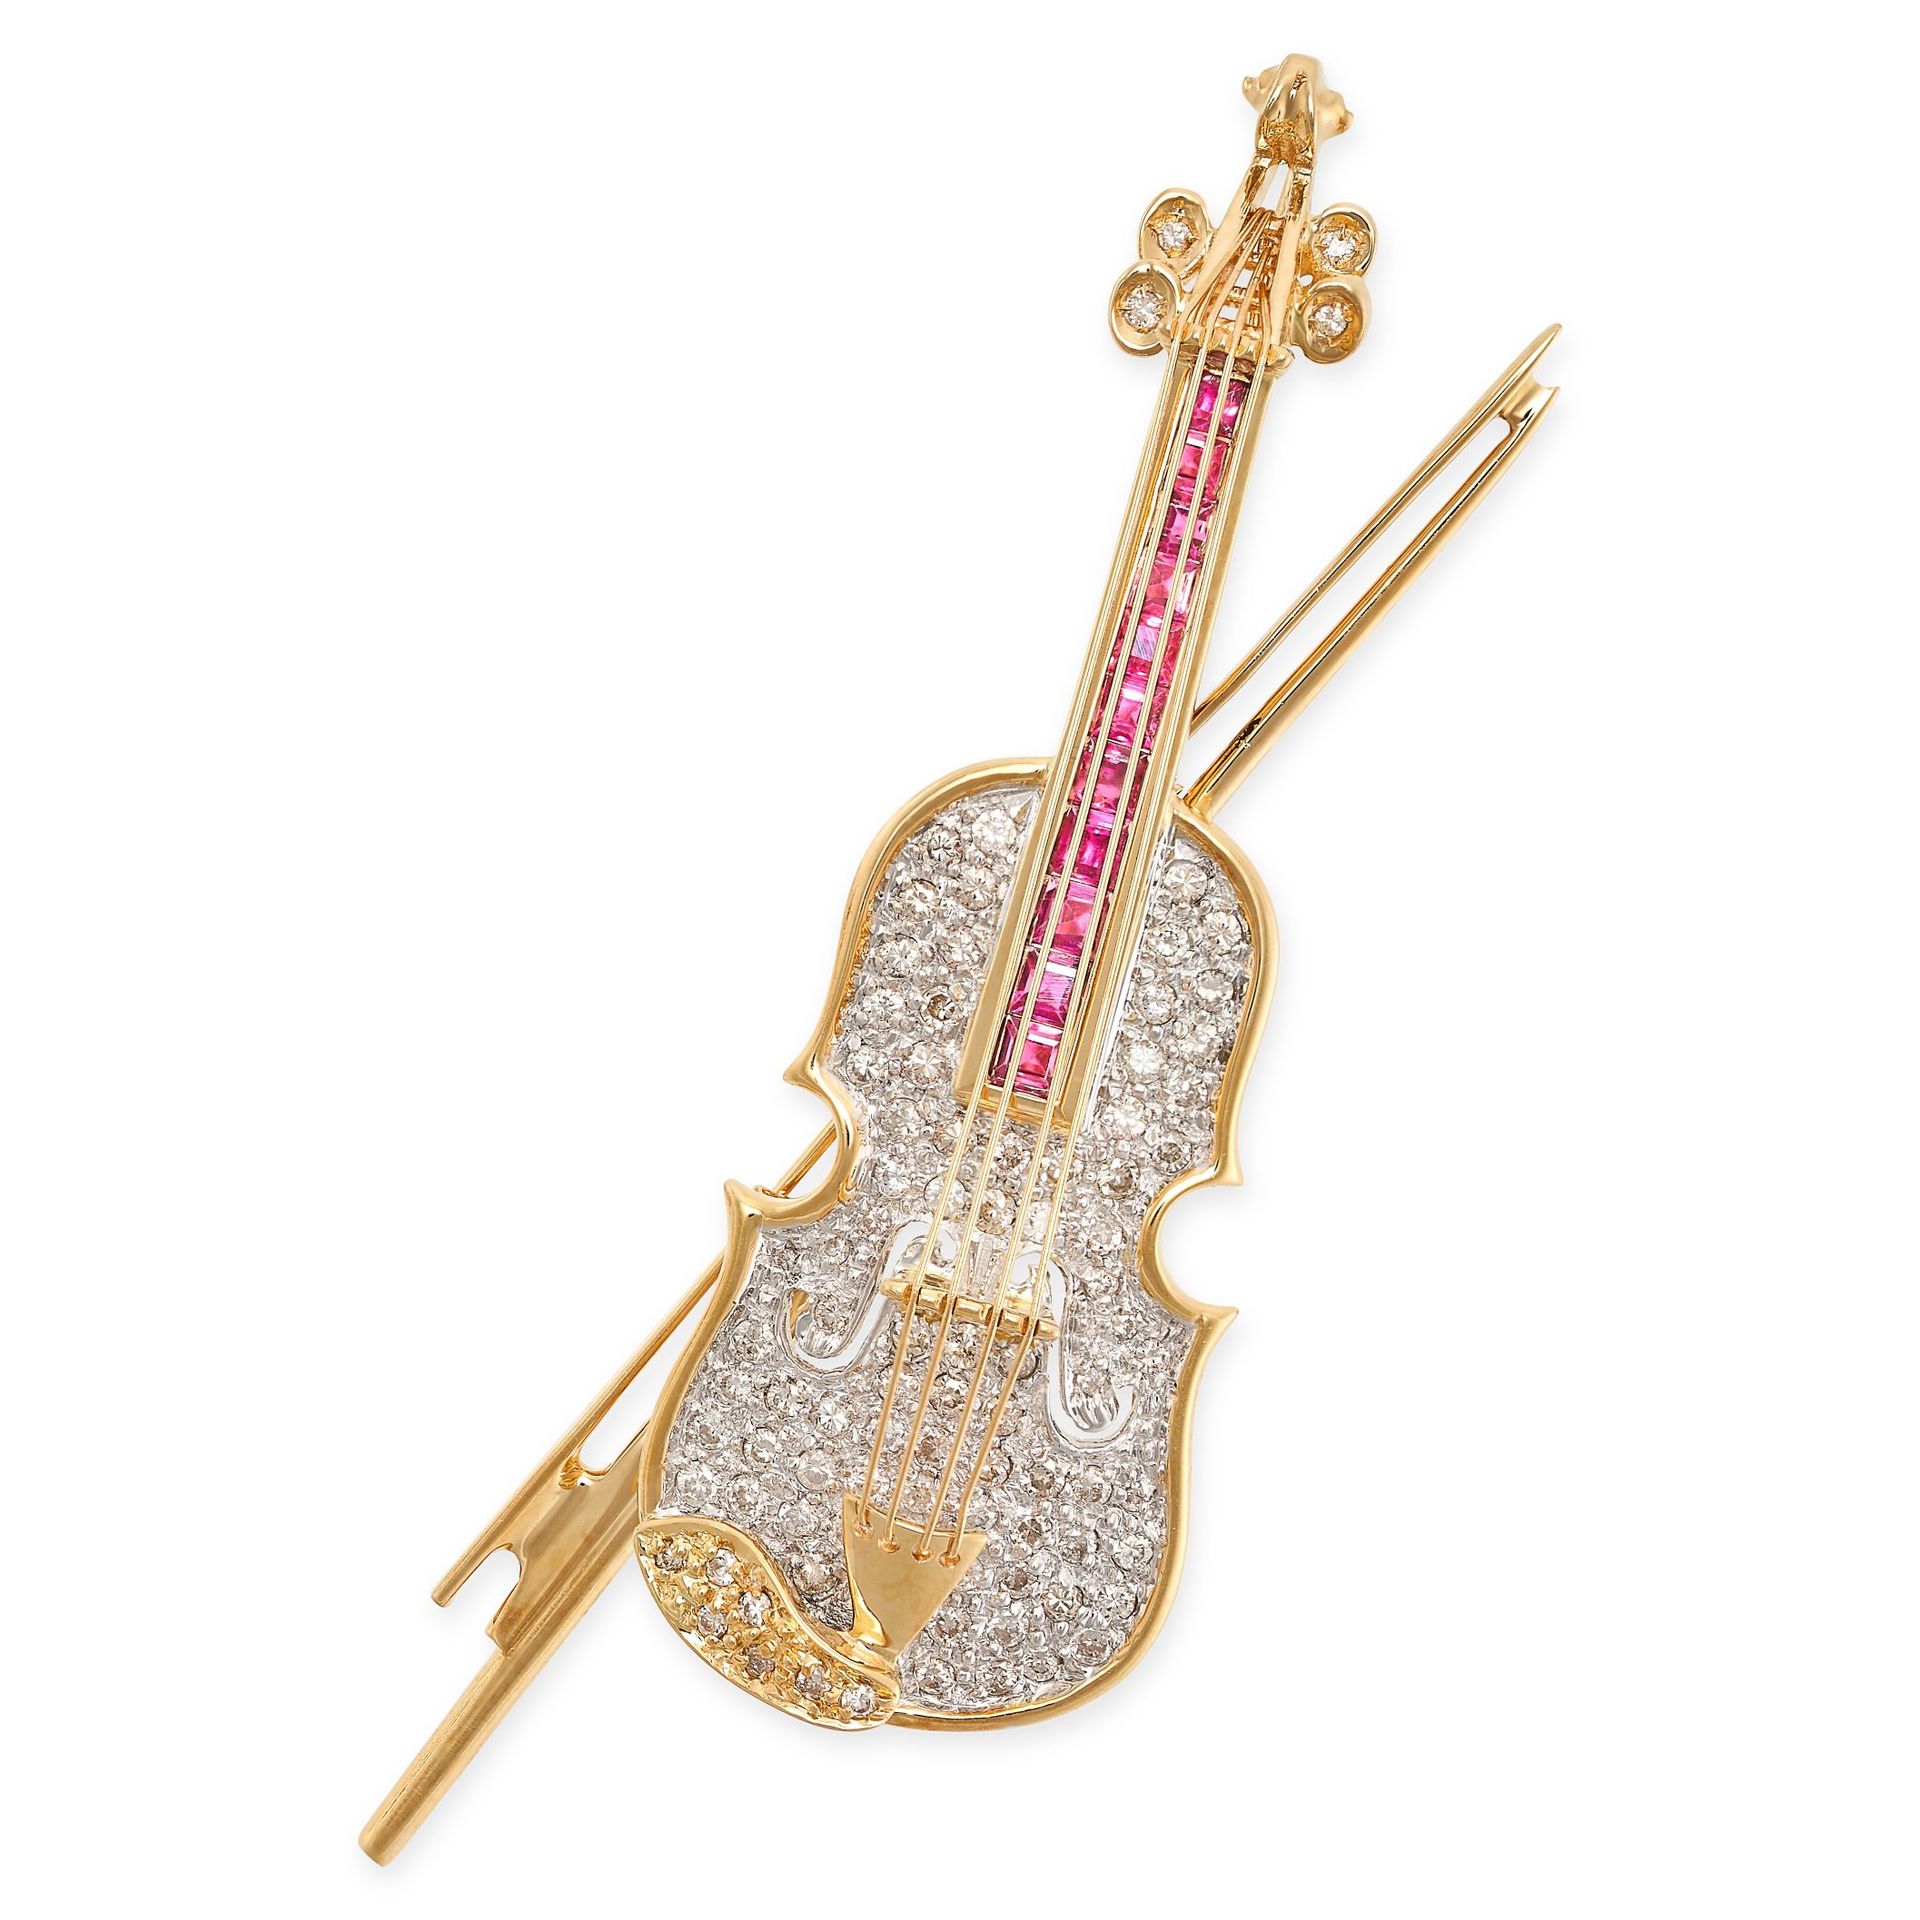 Null 一把18K黄金钻石和红宝石小提琴和琴弓手镯，设计成小提琴和琴弓的样子，琴身镶嵌着圆形切割钻石，指板上镶嵌着阶梯式切割红宝石，印有750，5.7cm，1&hellip;